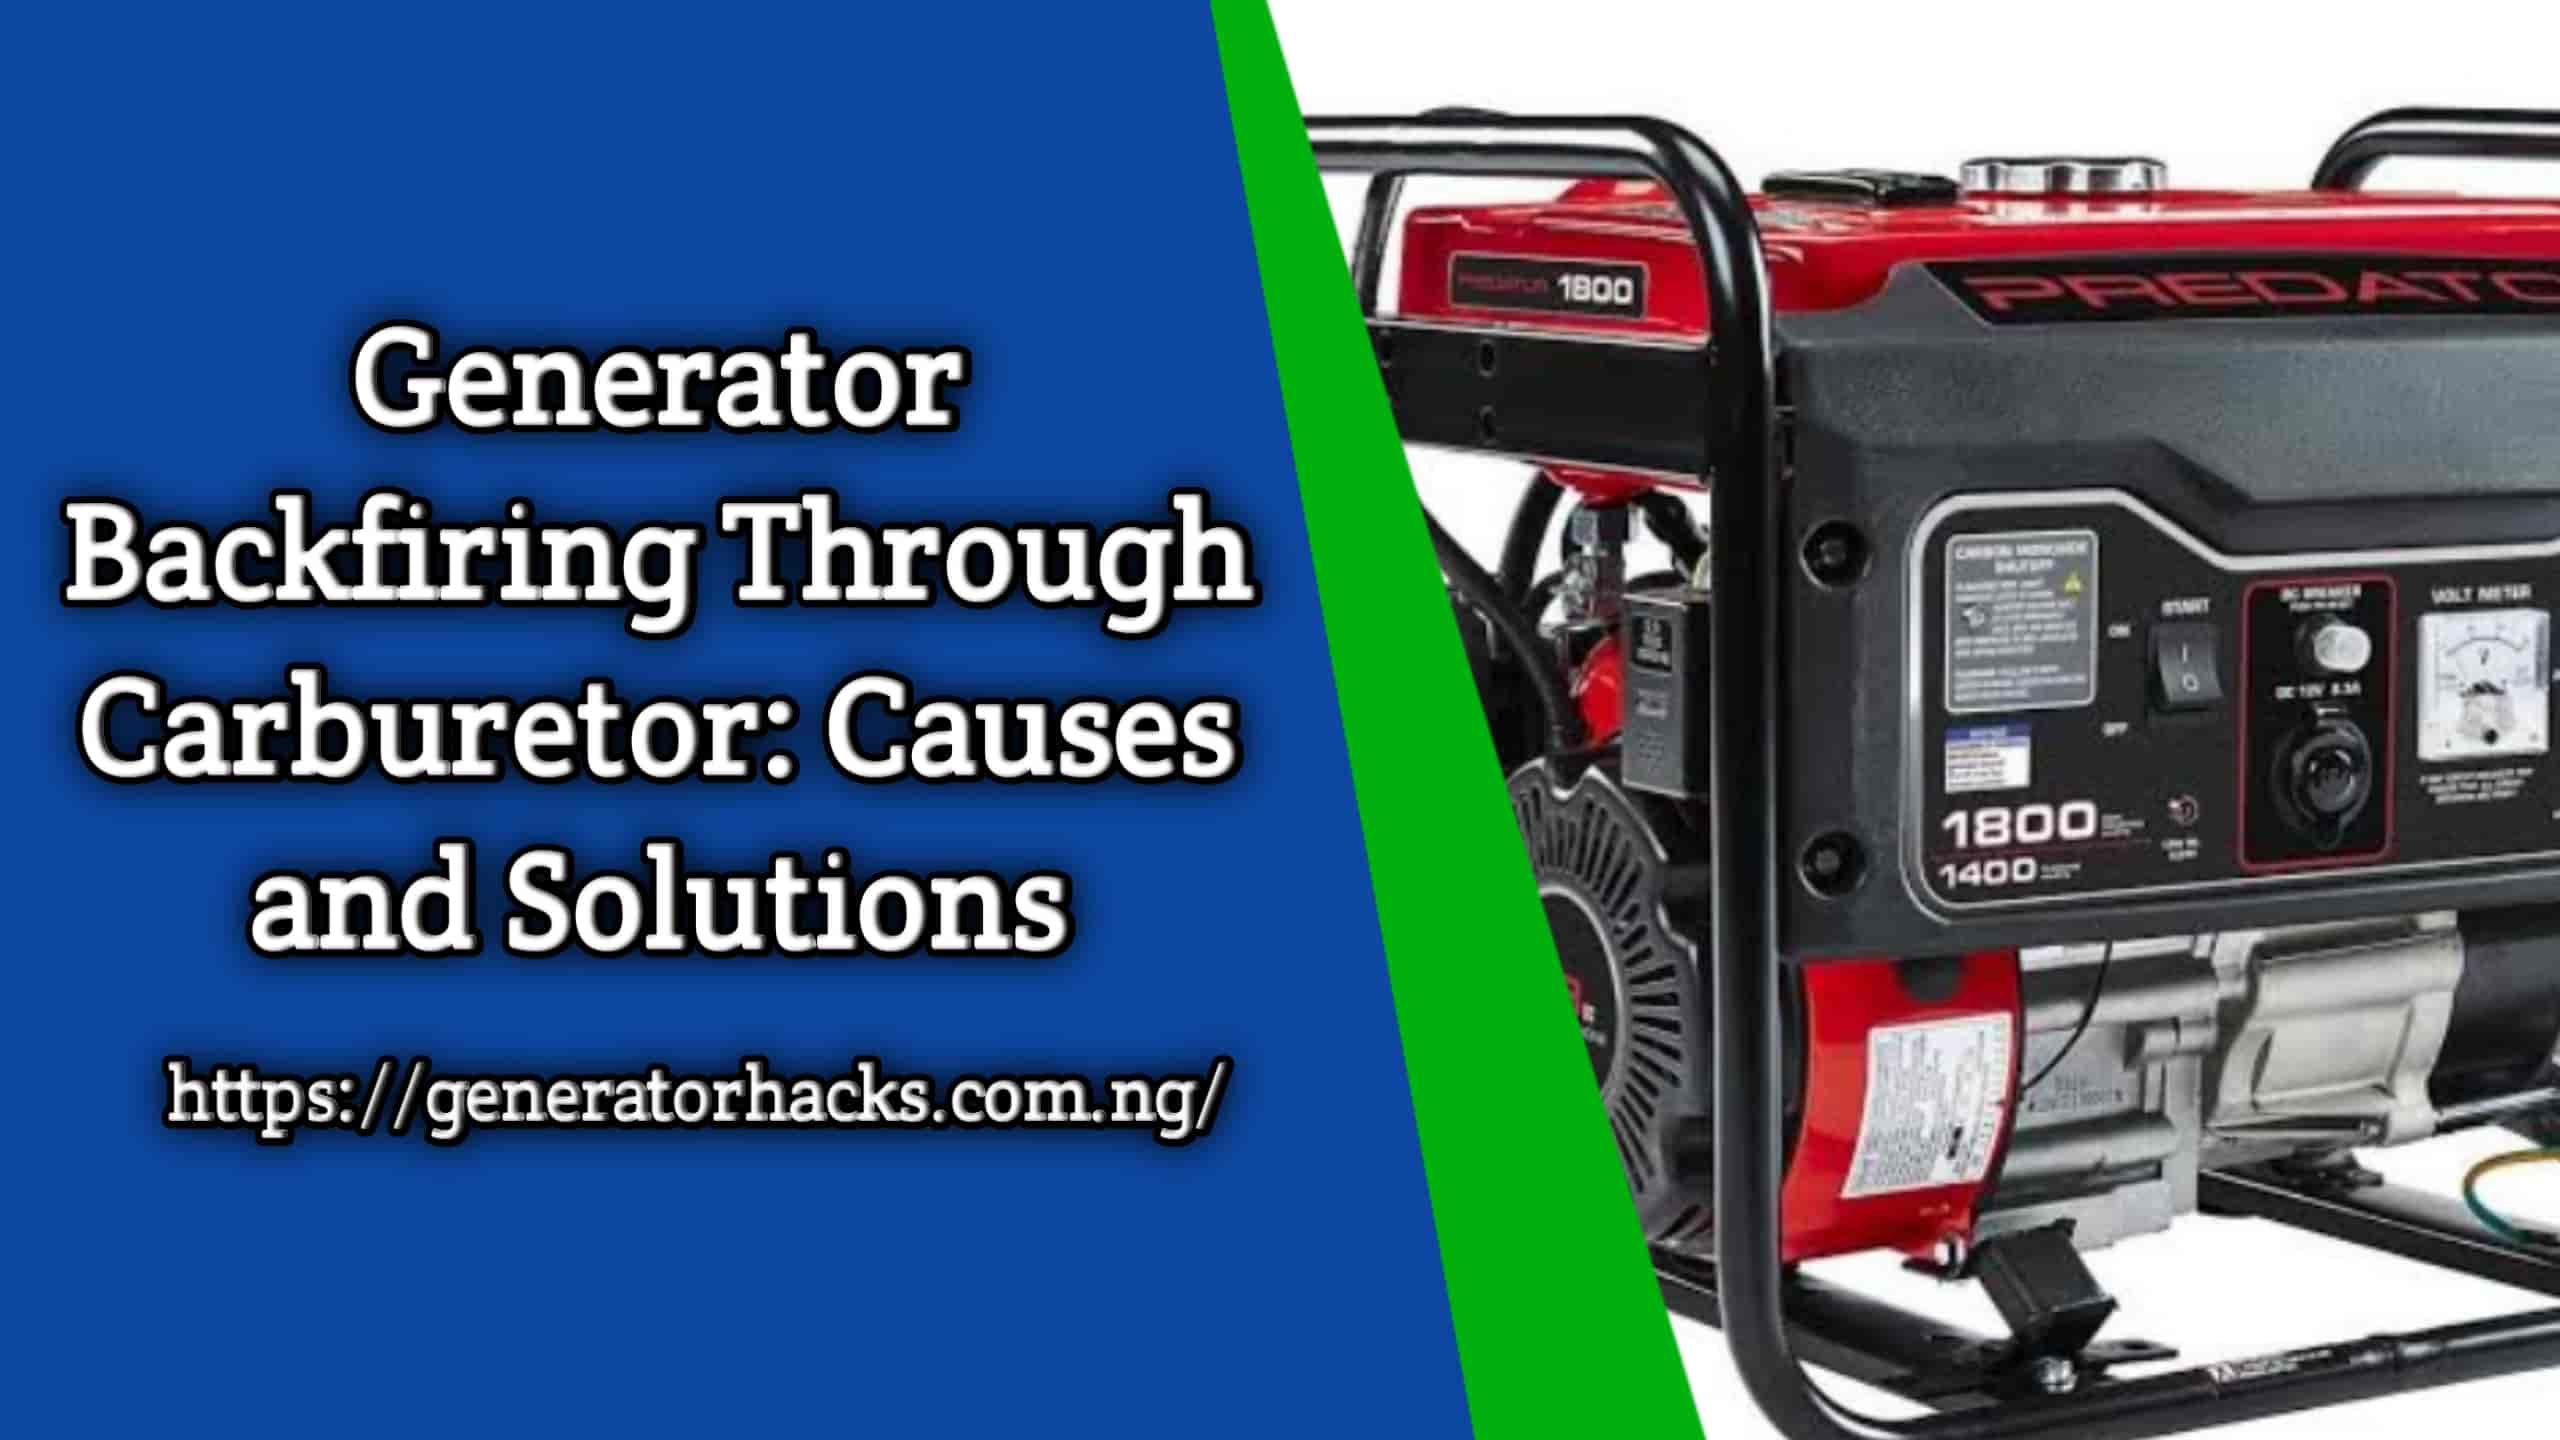 Generator Backfiring Through Carburetor: Causes and Solutions